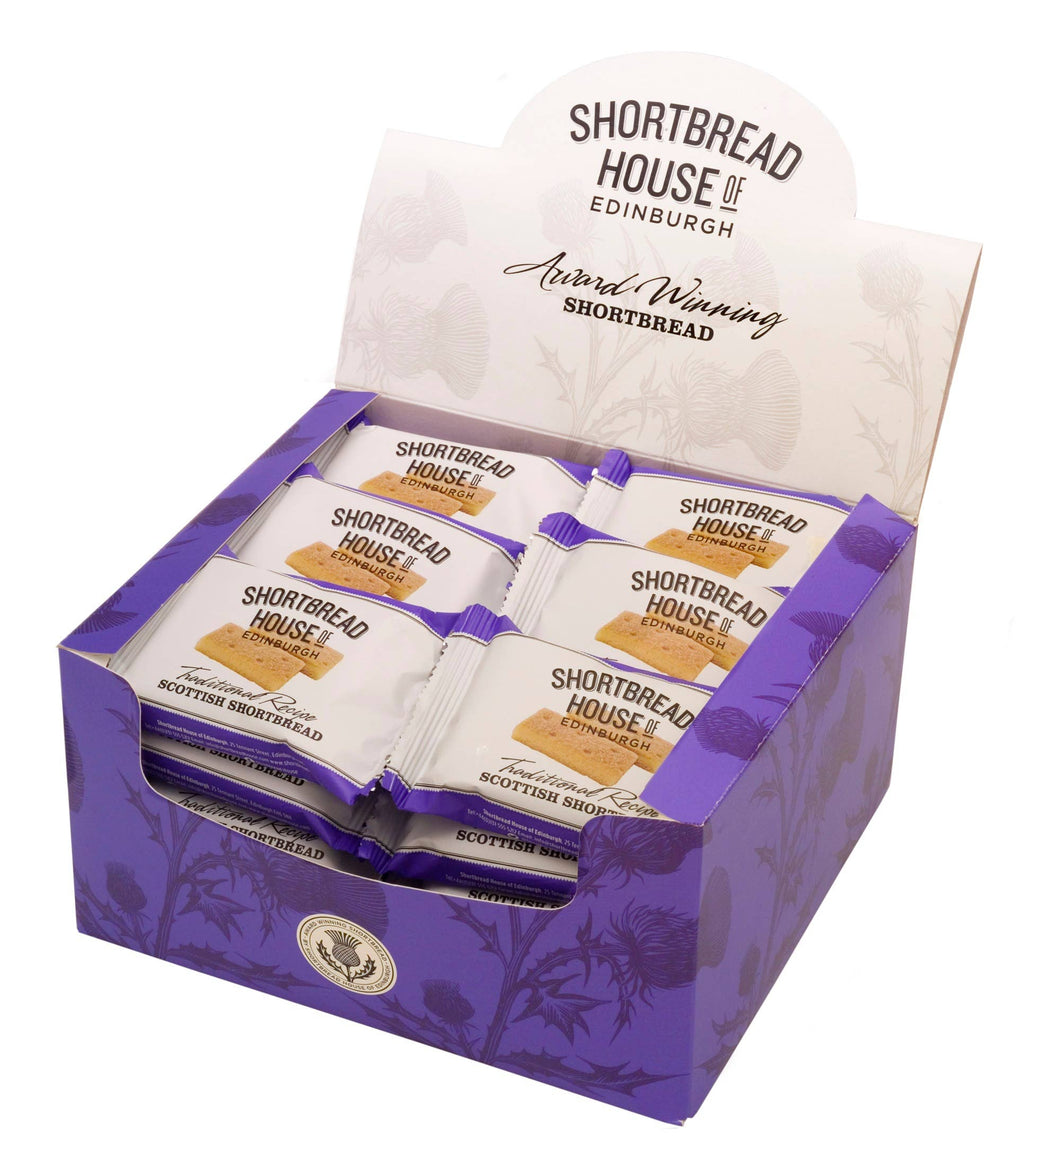 Shortbread House of Edinburgh - POS Twin Pack Original Shortbread Fingers